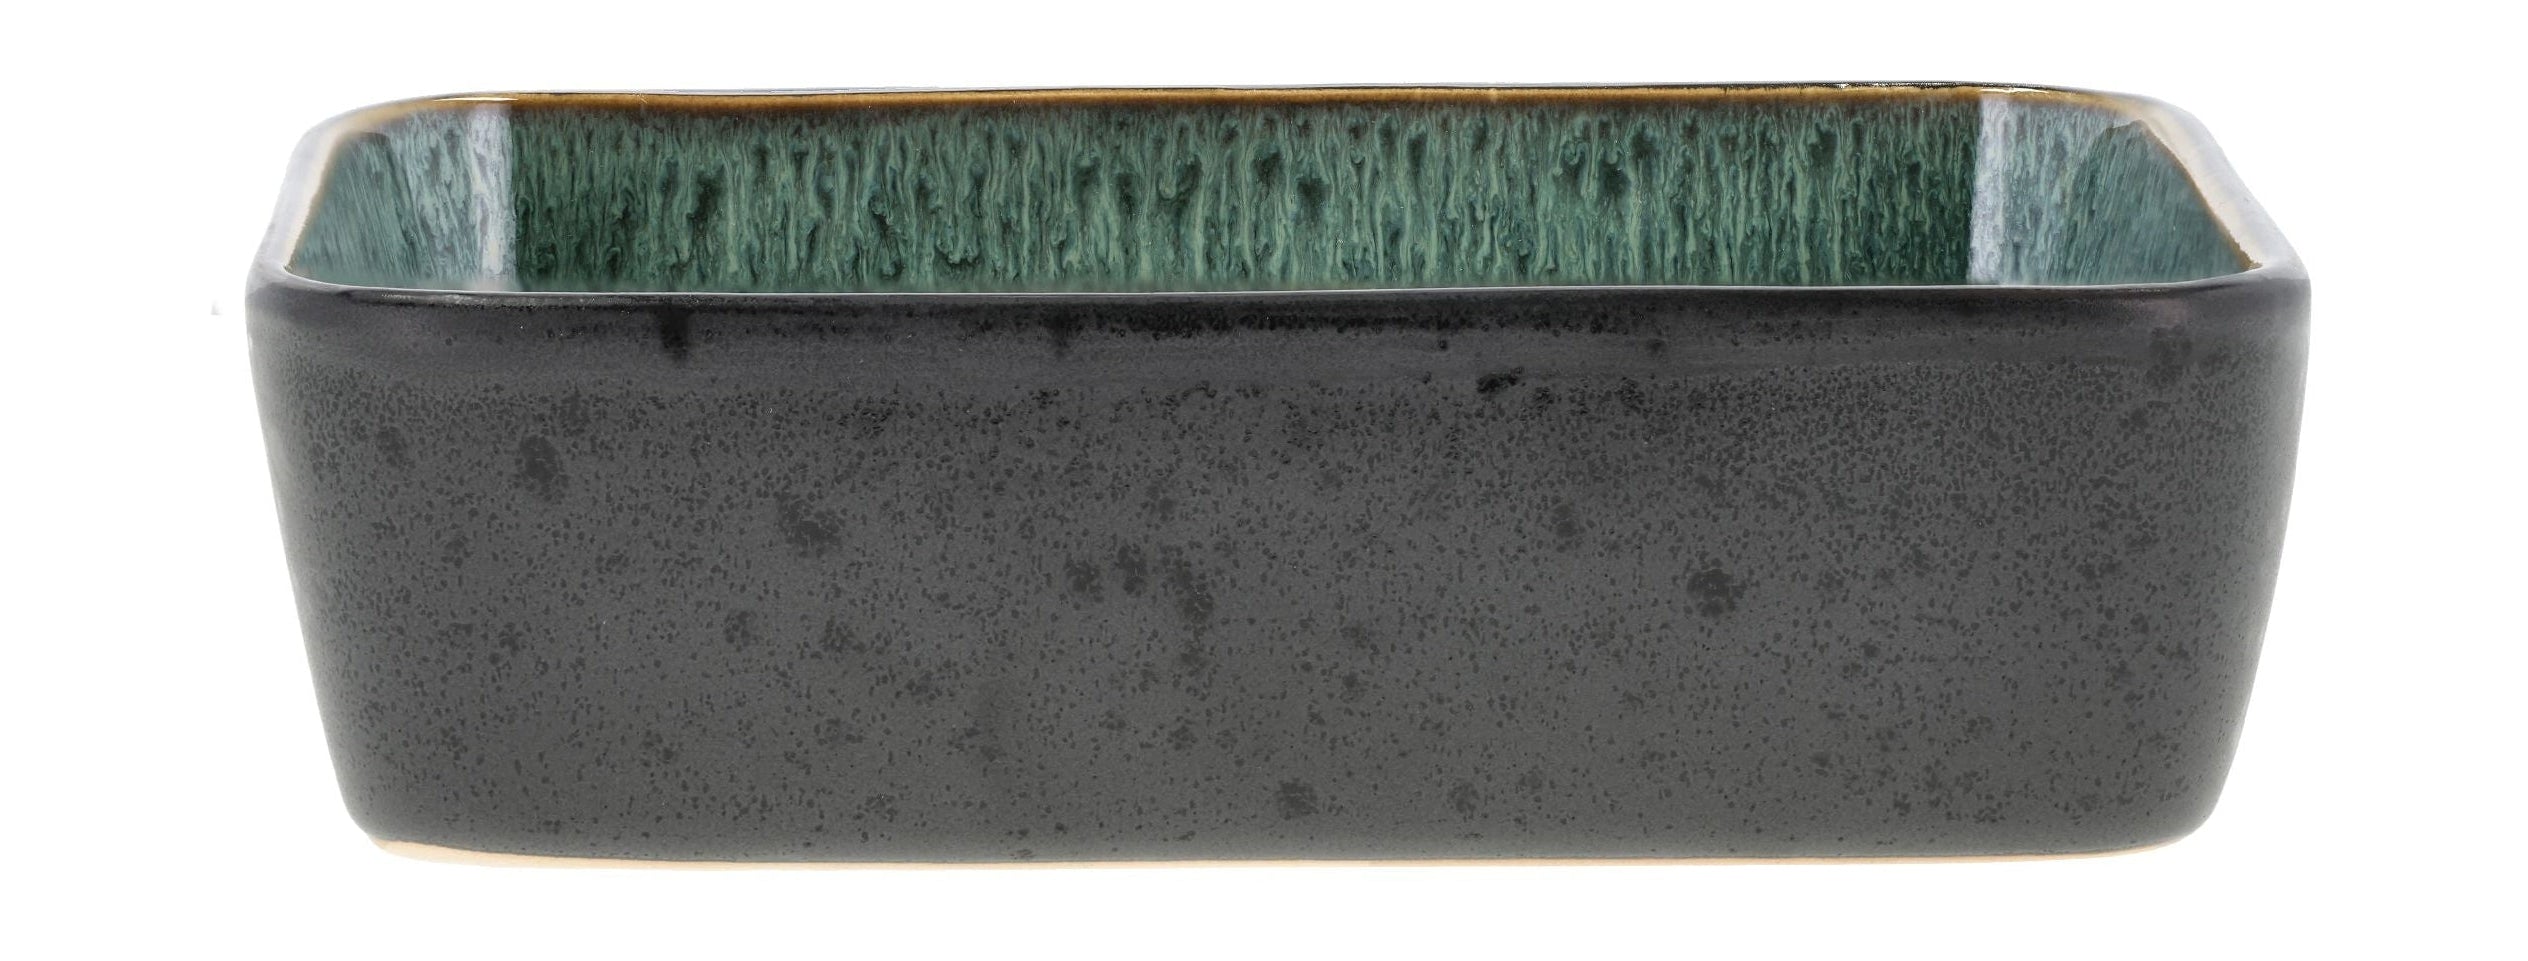 Bitz plato rectangular 19 x 14 x 5.3 cm, negro/verde